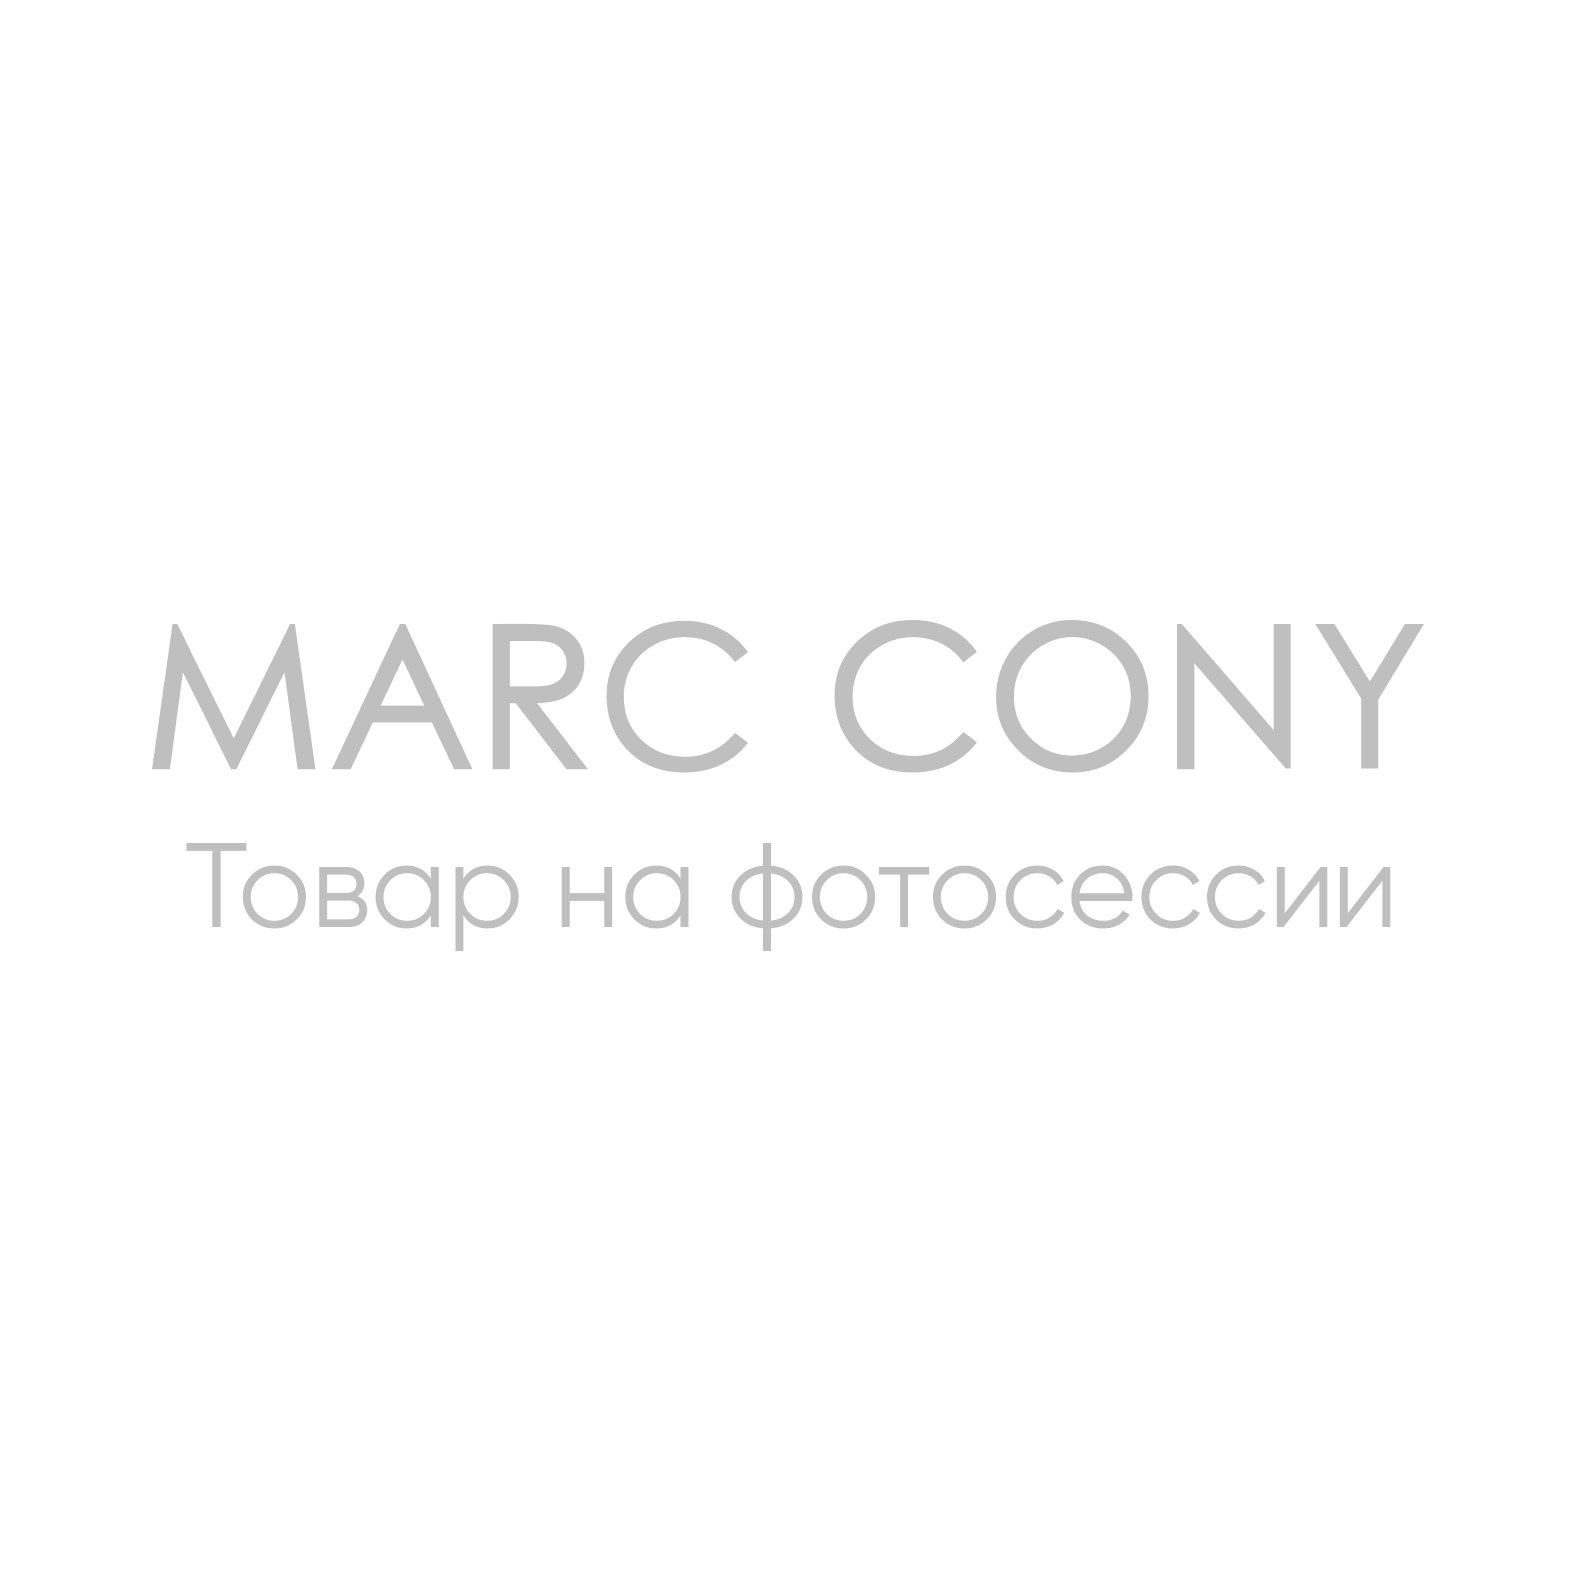 Marc Cony Обувь Интернет Магазин Краснодар Каталог